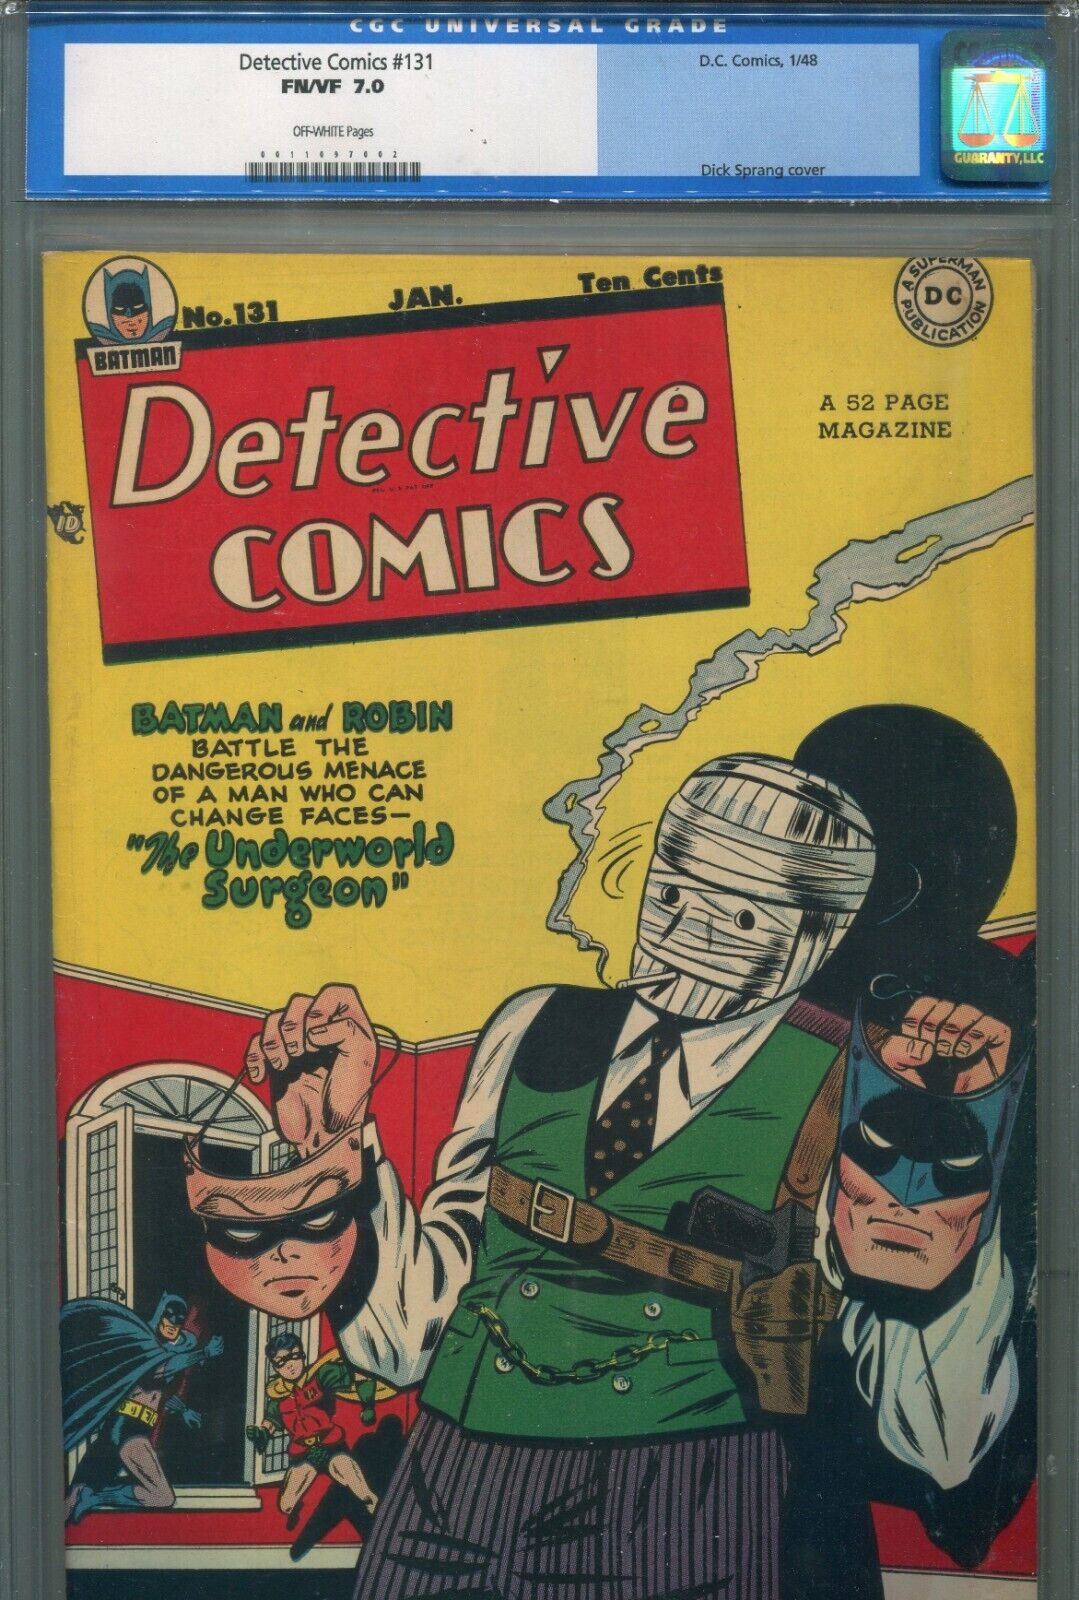 DETECTIVE COMICS 131  CLASSIC BOB KANE BATMAN  ROBIN COVER  CGC 70  1948